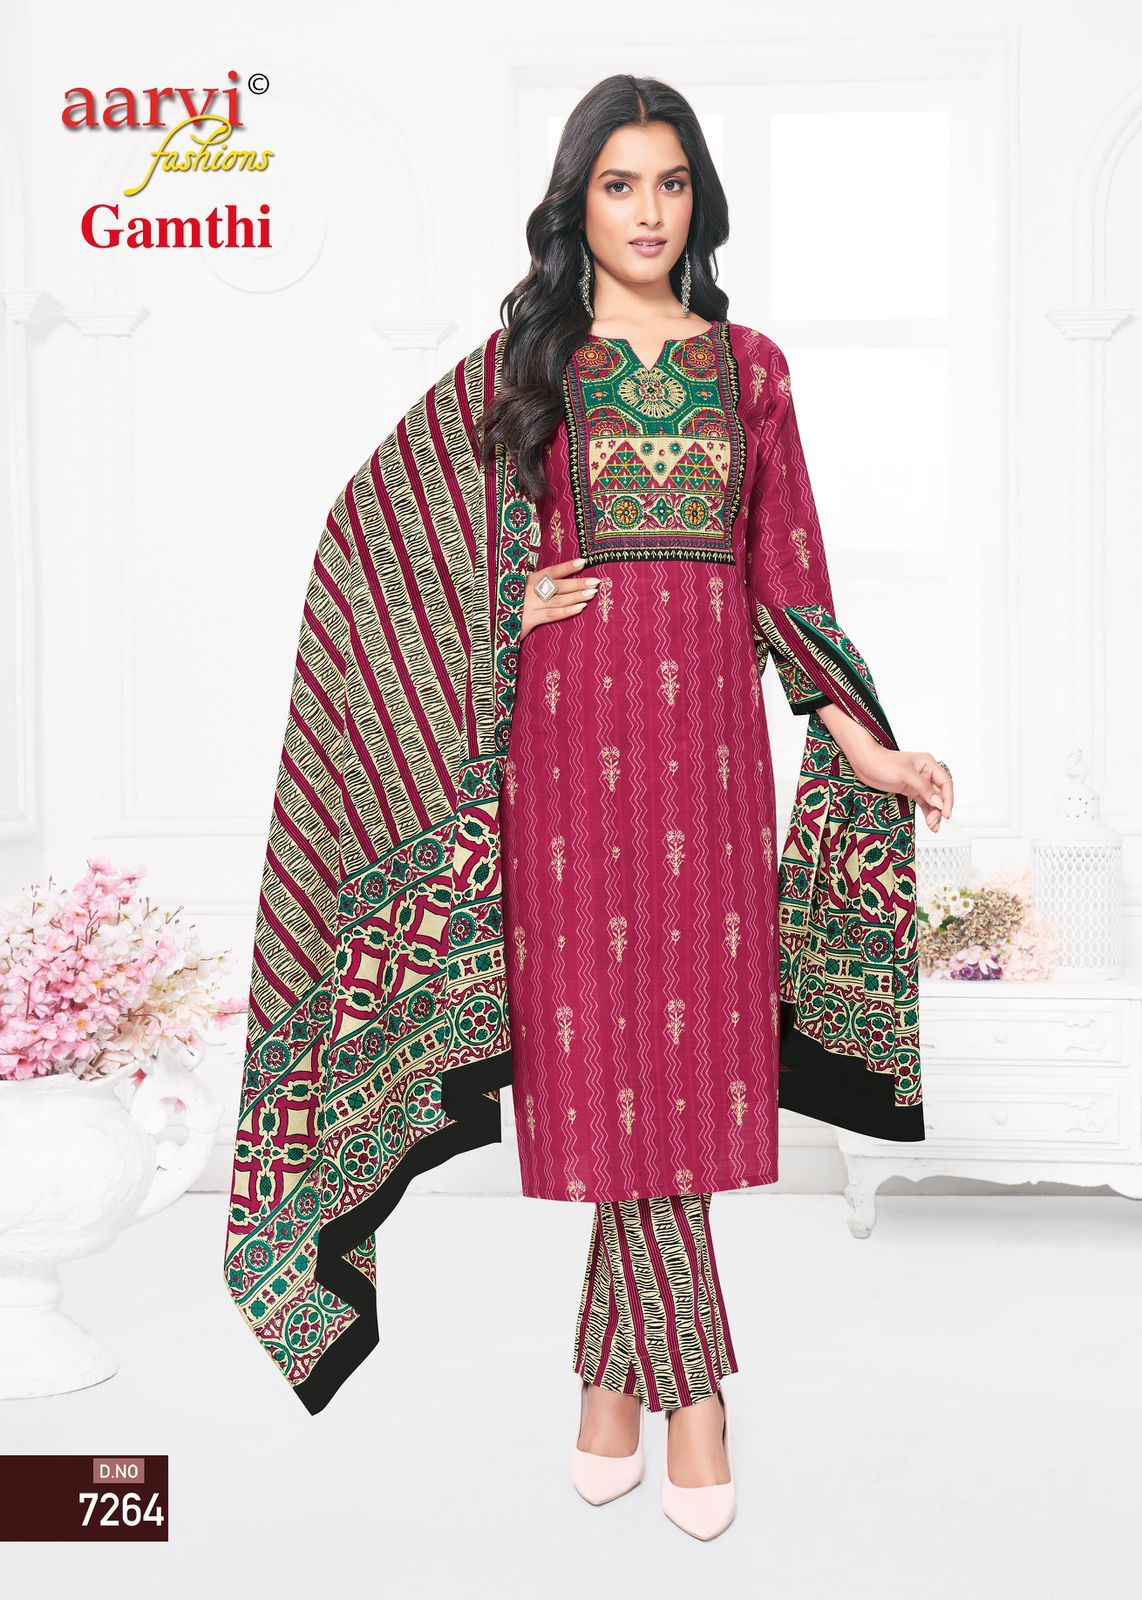 Aarvi Fashion Gamthi Vol-4 Cotton Radymade Suit (10 pcs Catalogue)